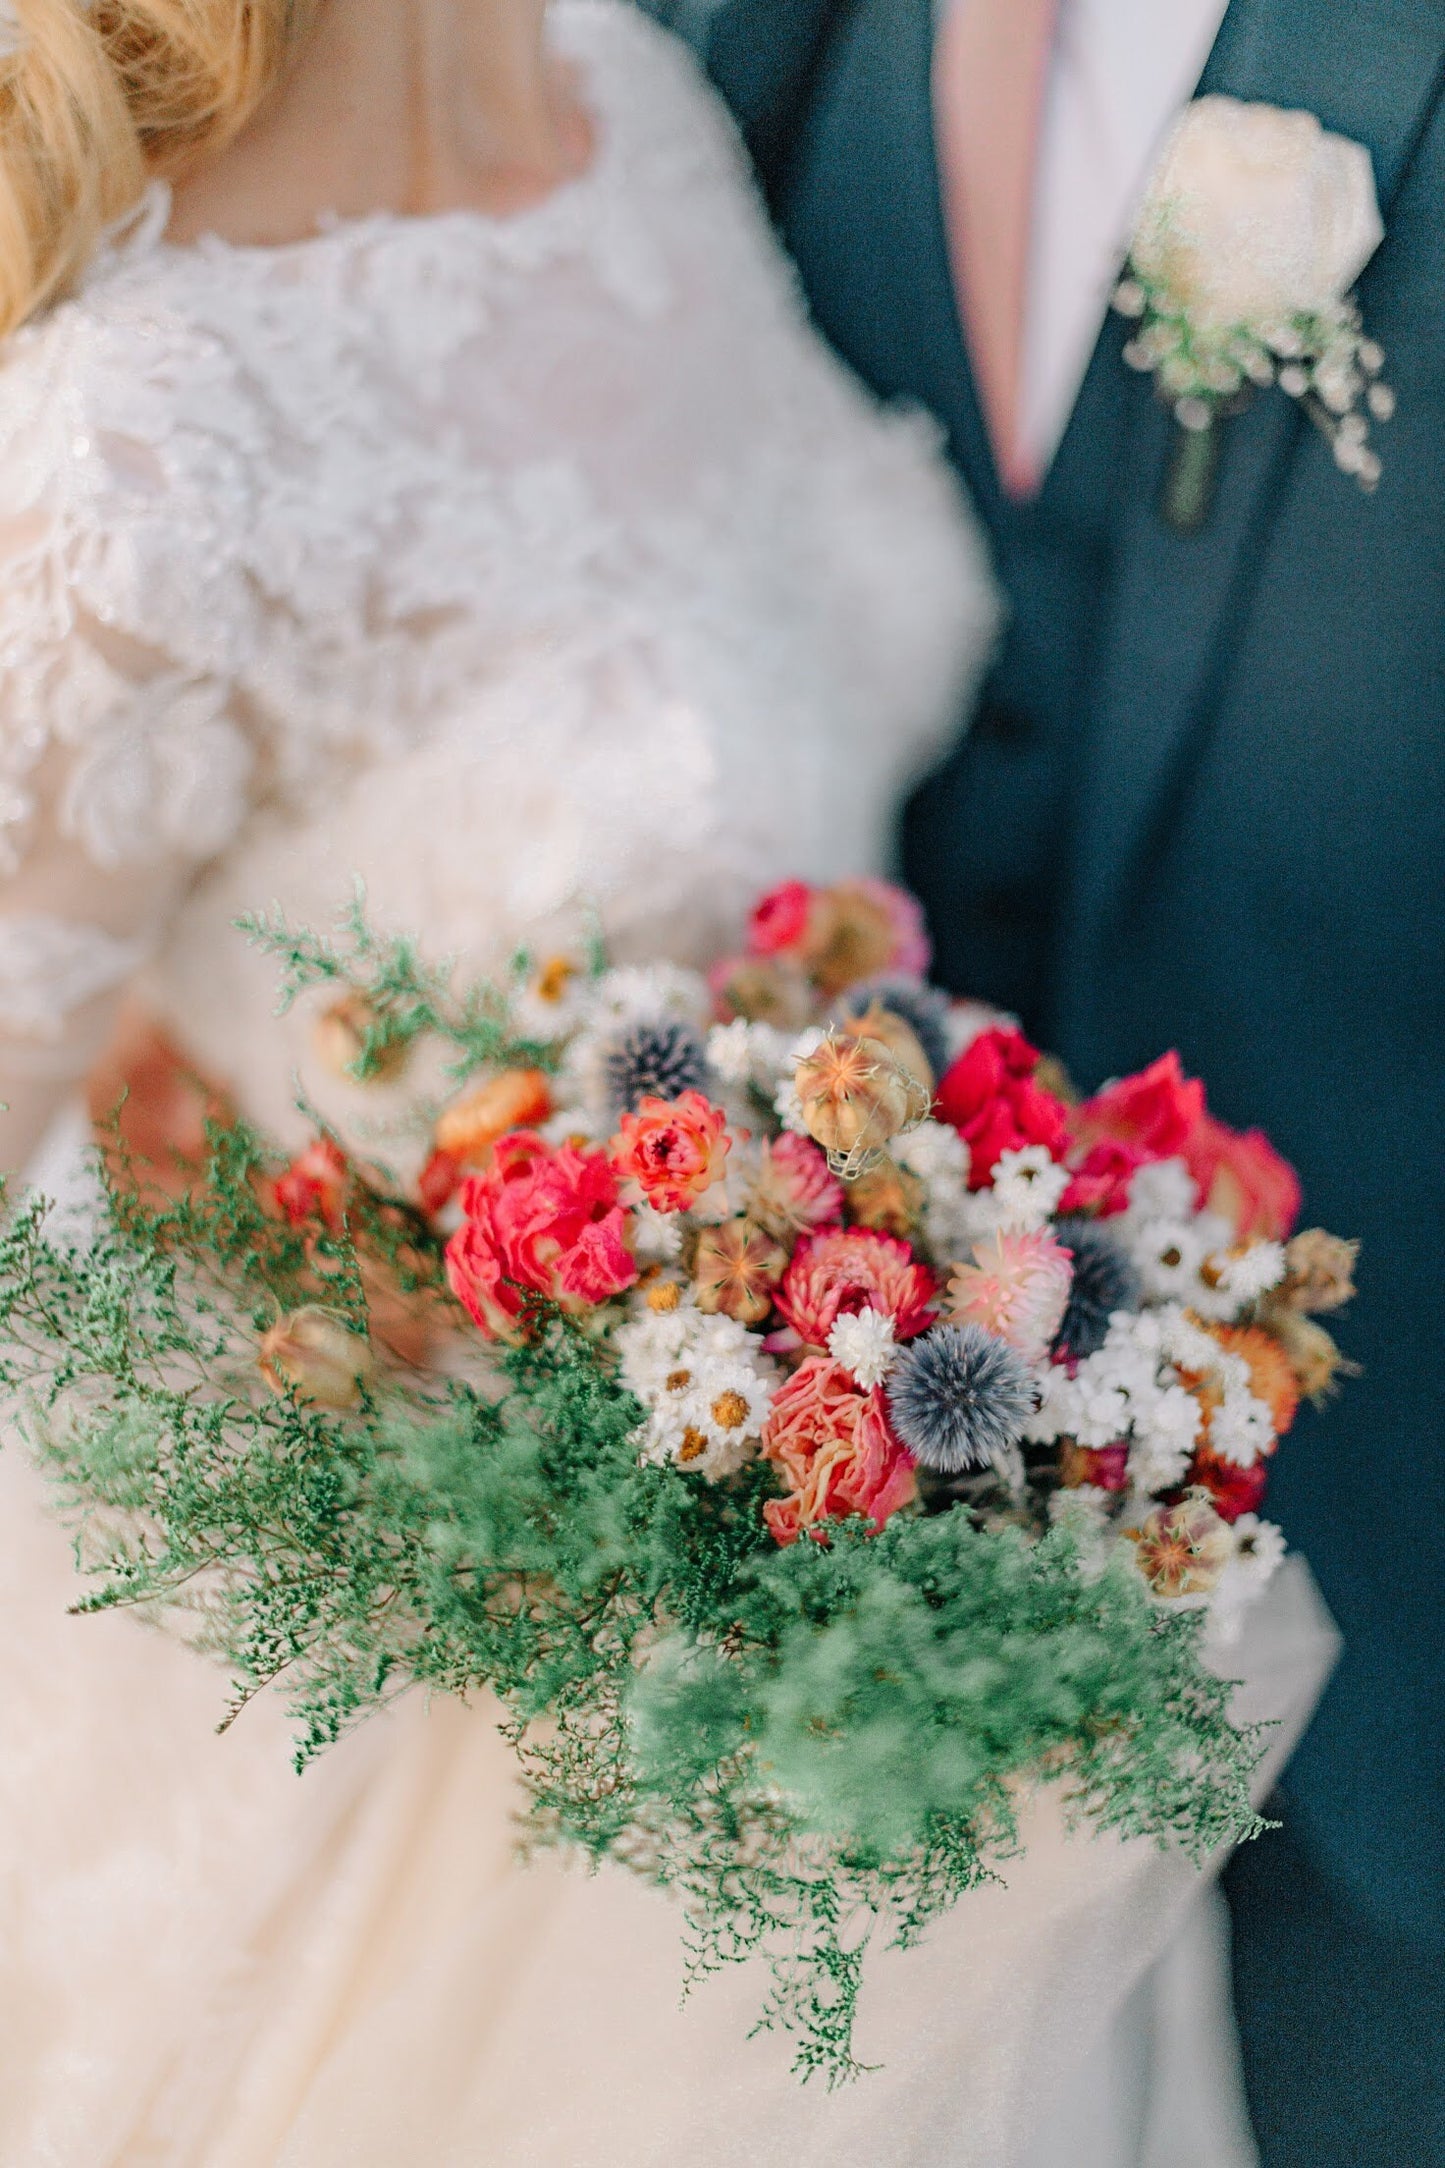 Wedding Bouquet, Dried Flowers, Preserved Floral, Bridal, Peonies, Strawflowers, Globe Thistles, Ammobium, Caspia, Nigella